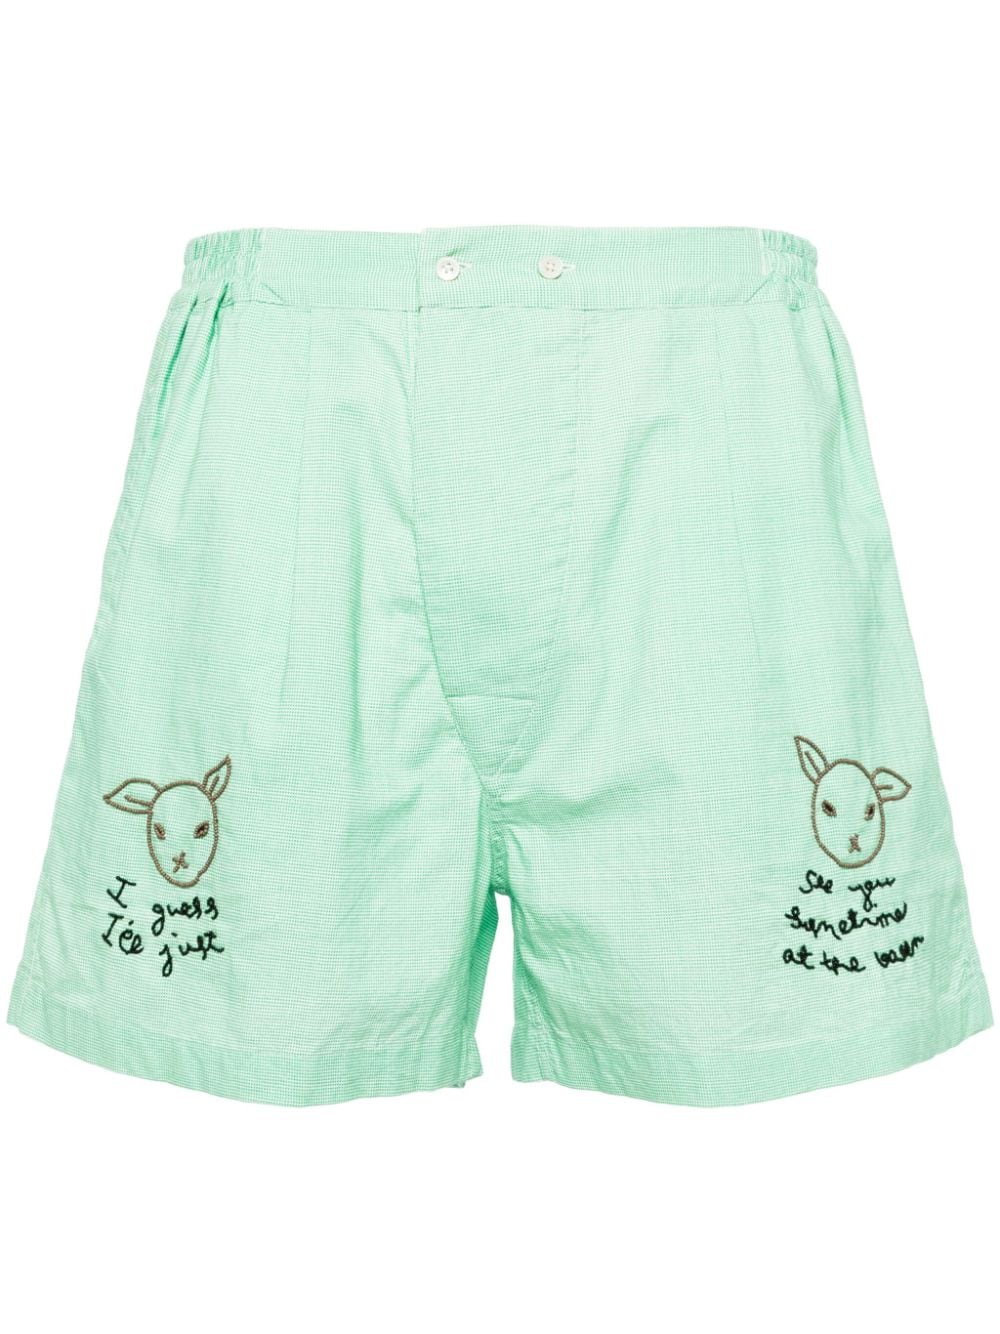 See You At The Barn cotton shorts